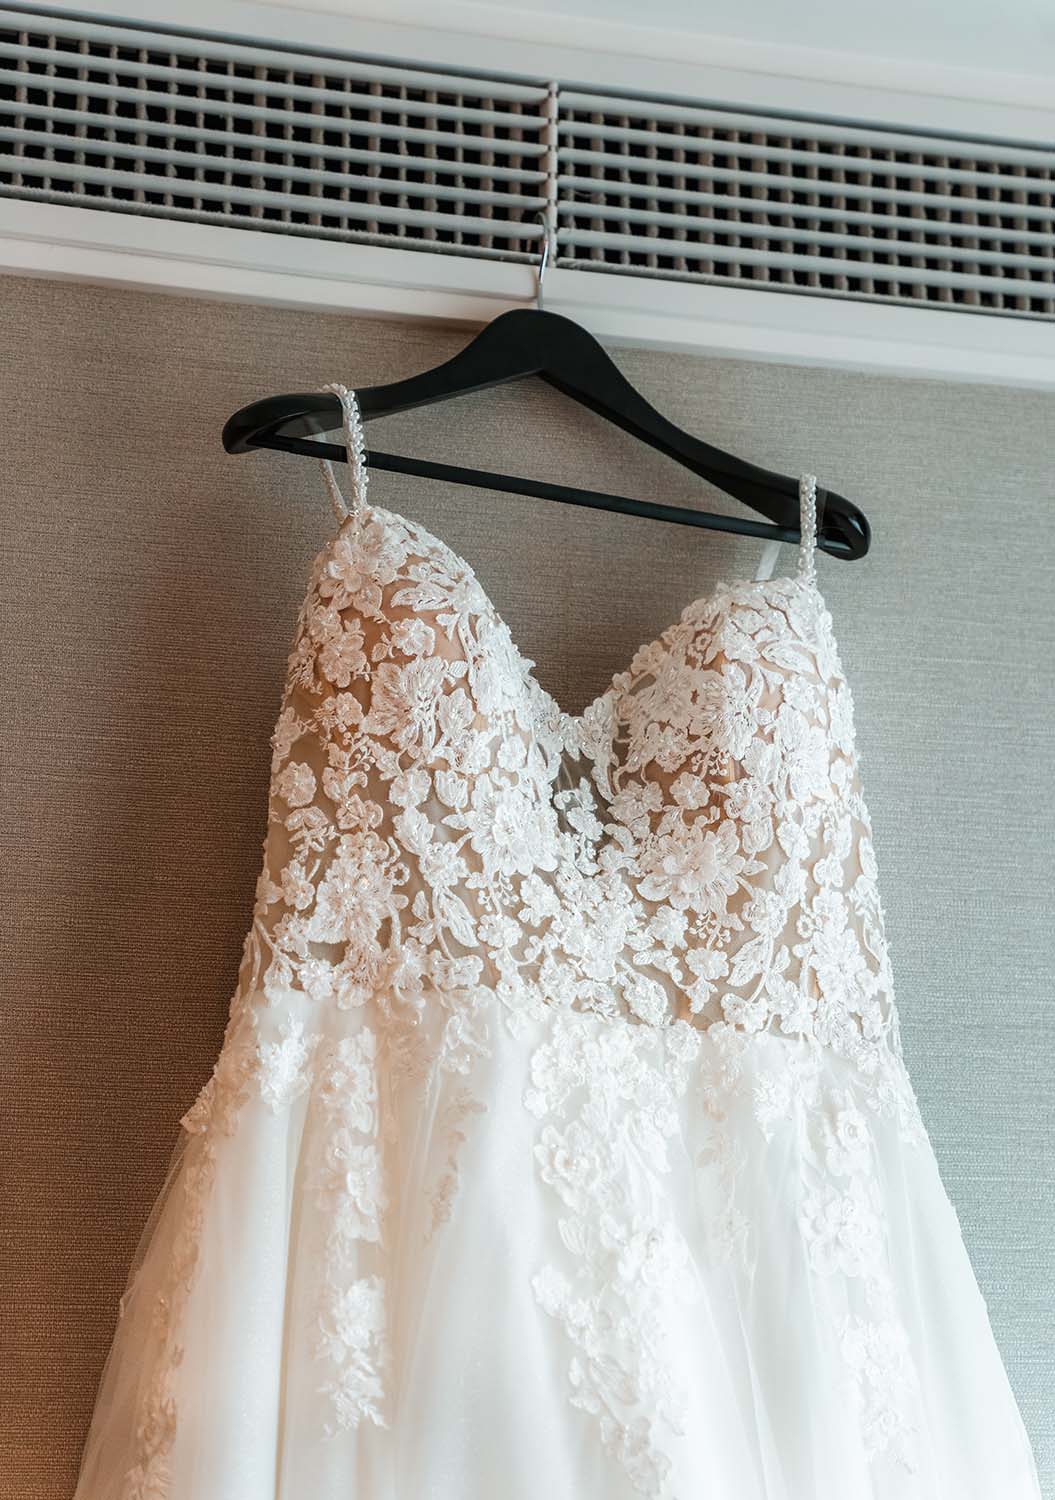 Destination Wedding Photography - Bride Dress on Hanger